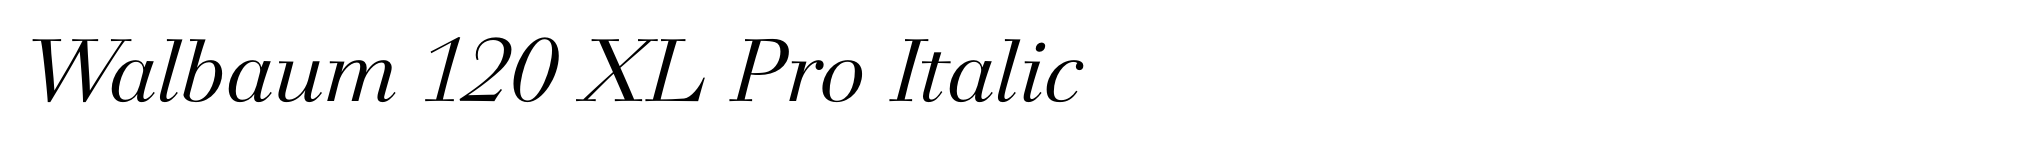 Walbaum 120 XL Pro Italic image